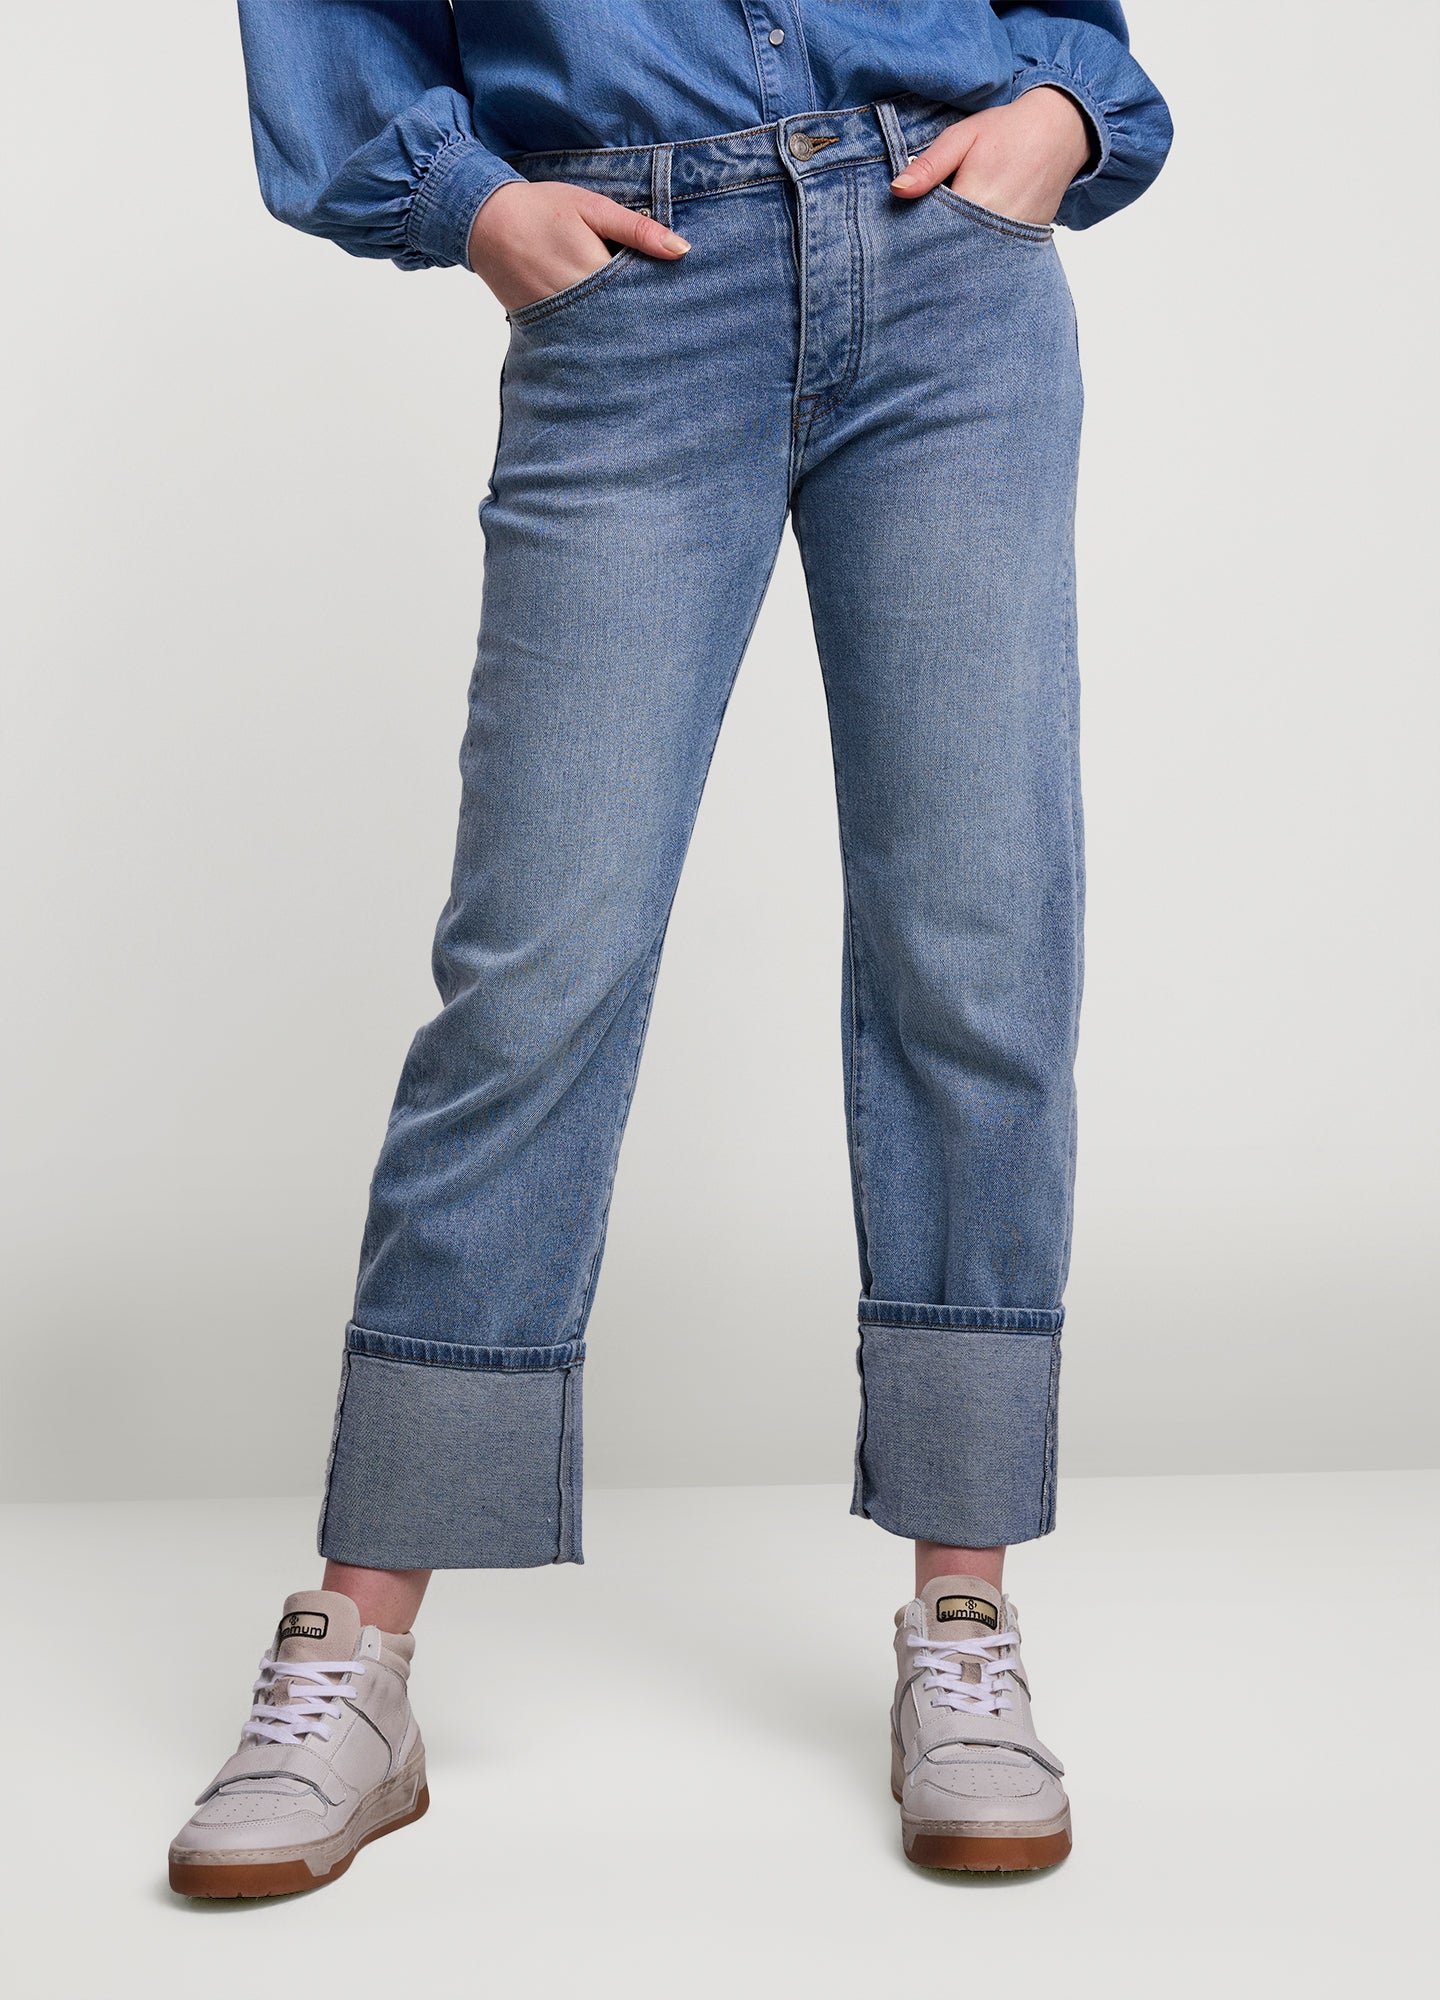 5-pocket SARIN jeans